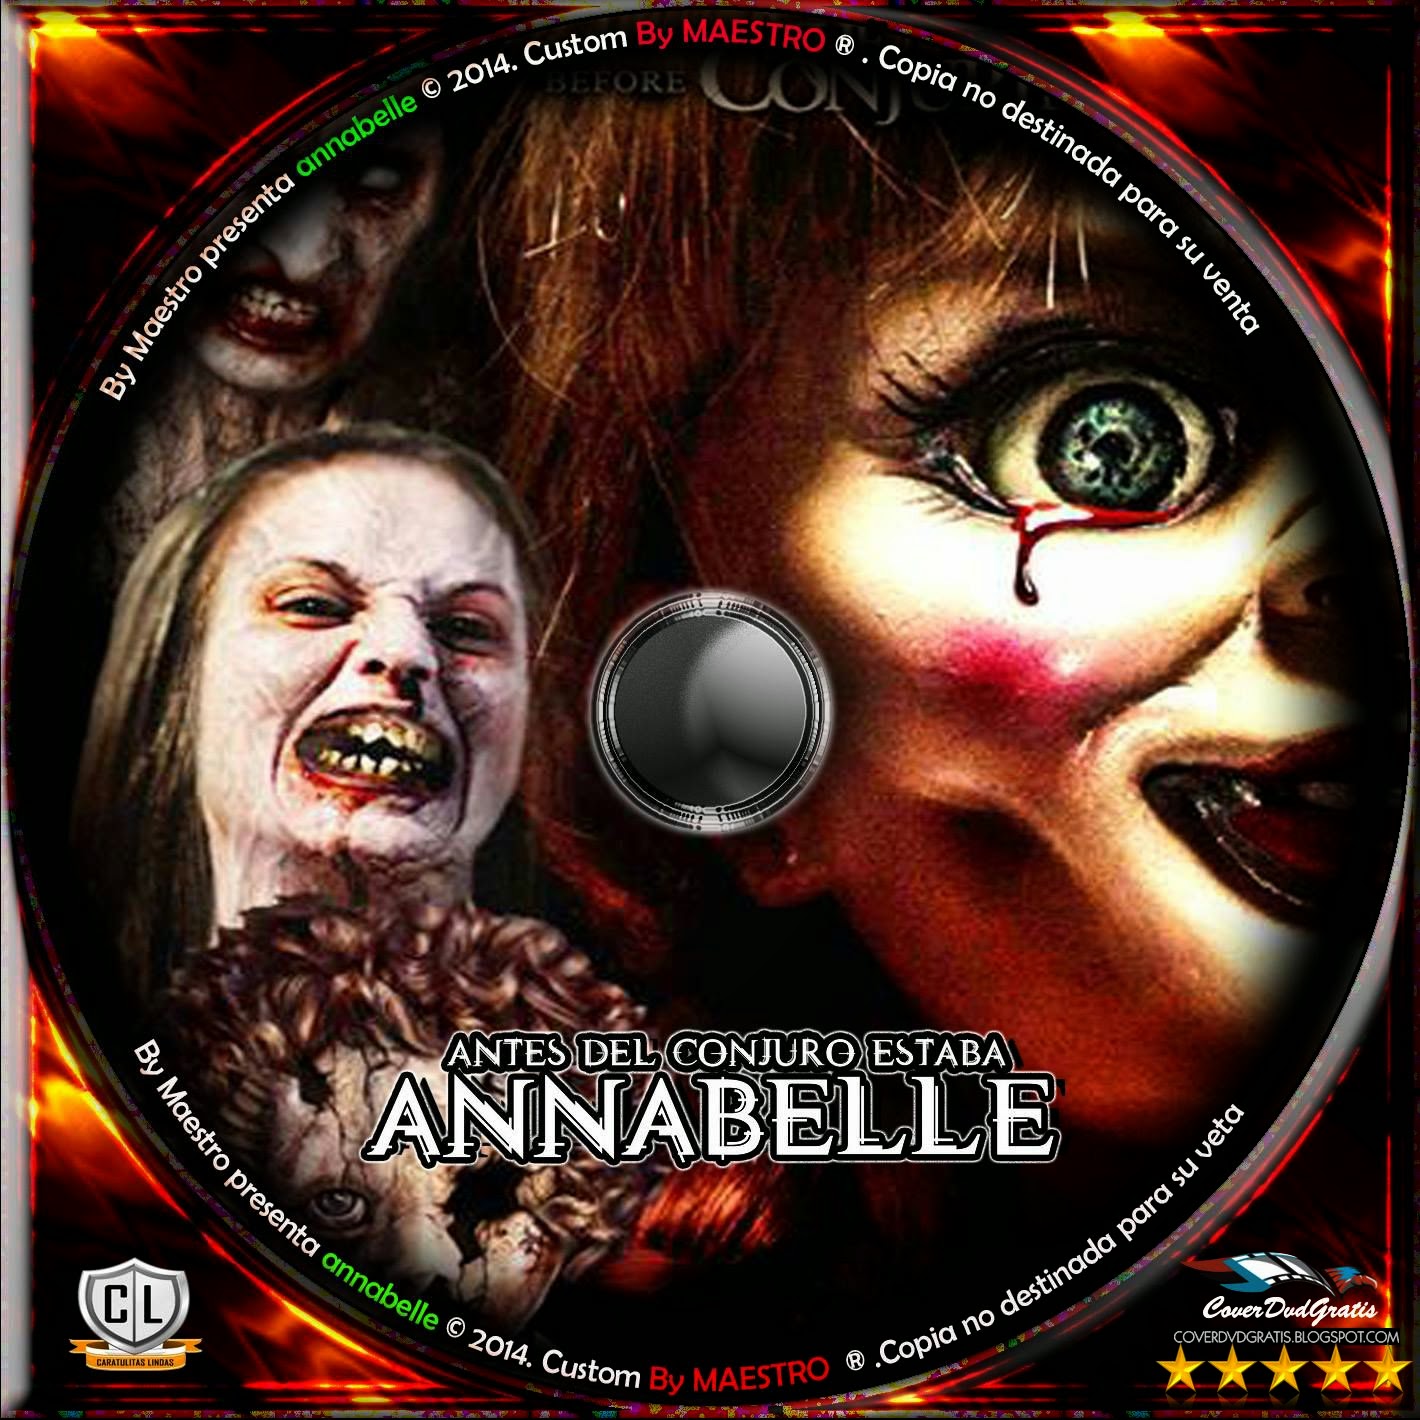 Annabelle DVD COVER 2014 ESPAÑOL Archivos CoverDvdGratis